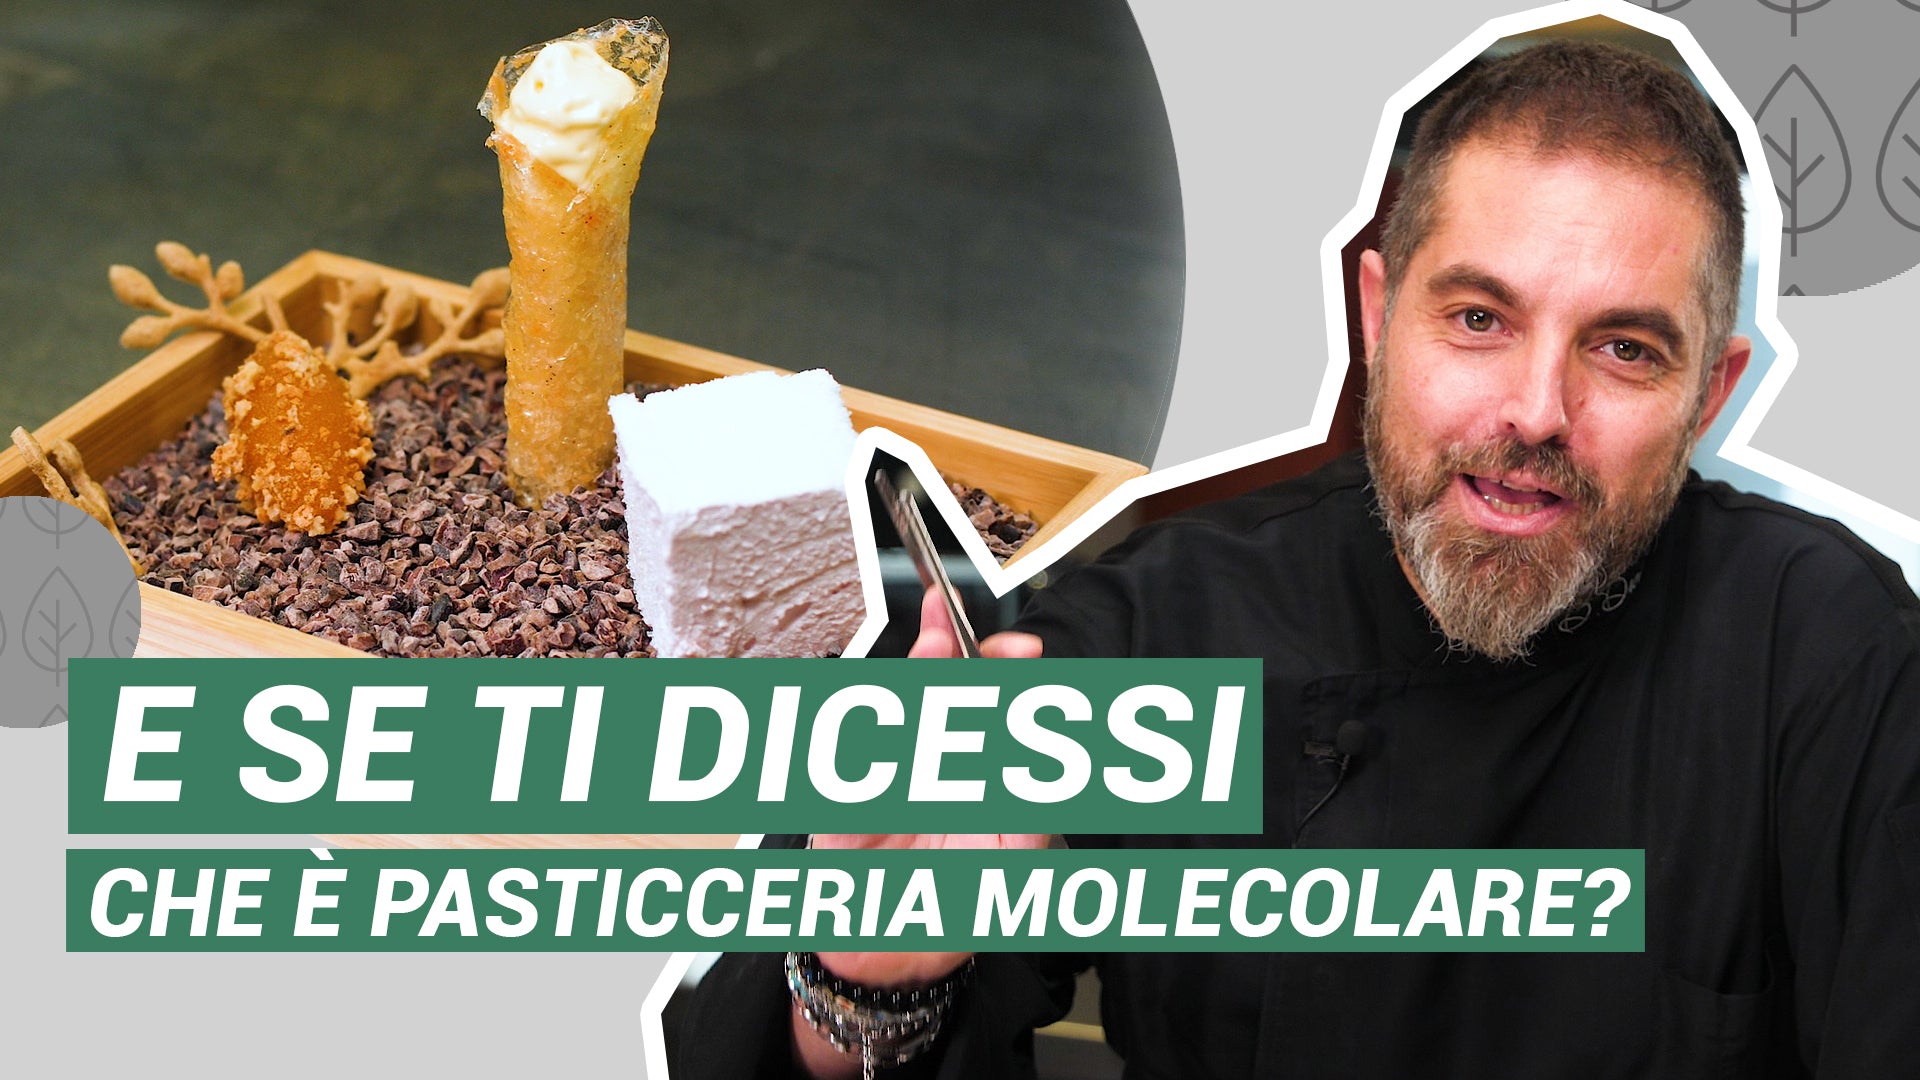 Molecular pastry techniques with SaporePuro and chef Davide Damiano